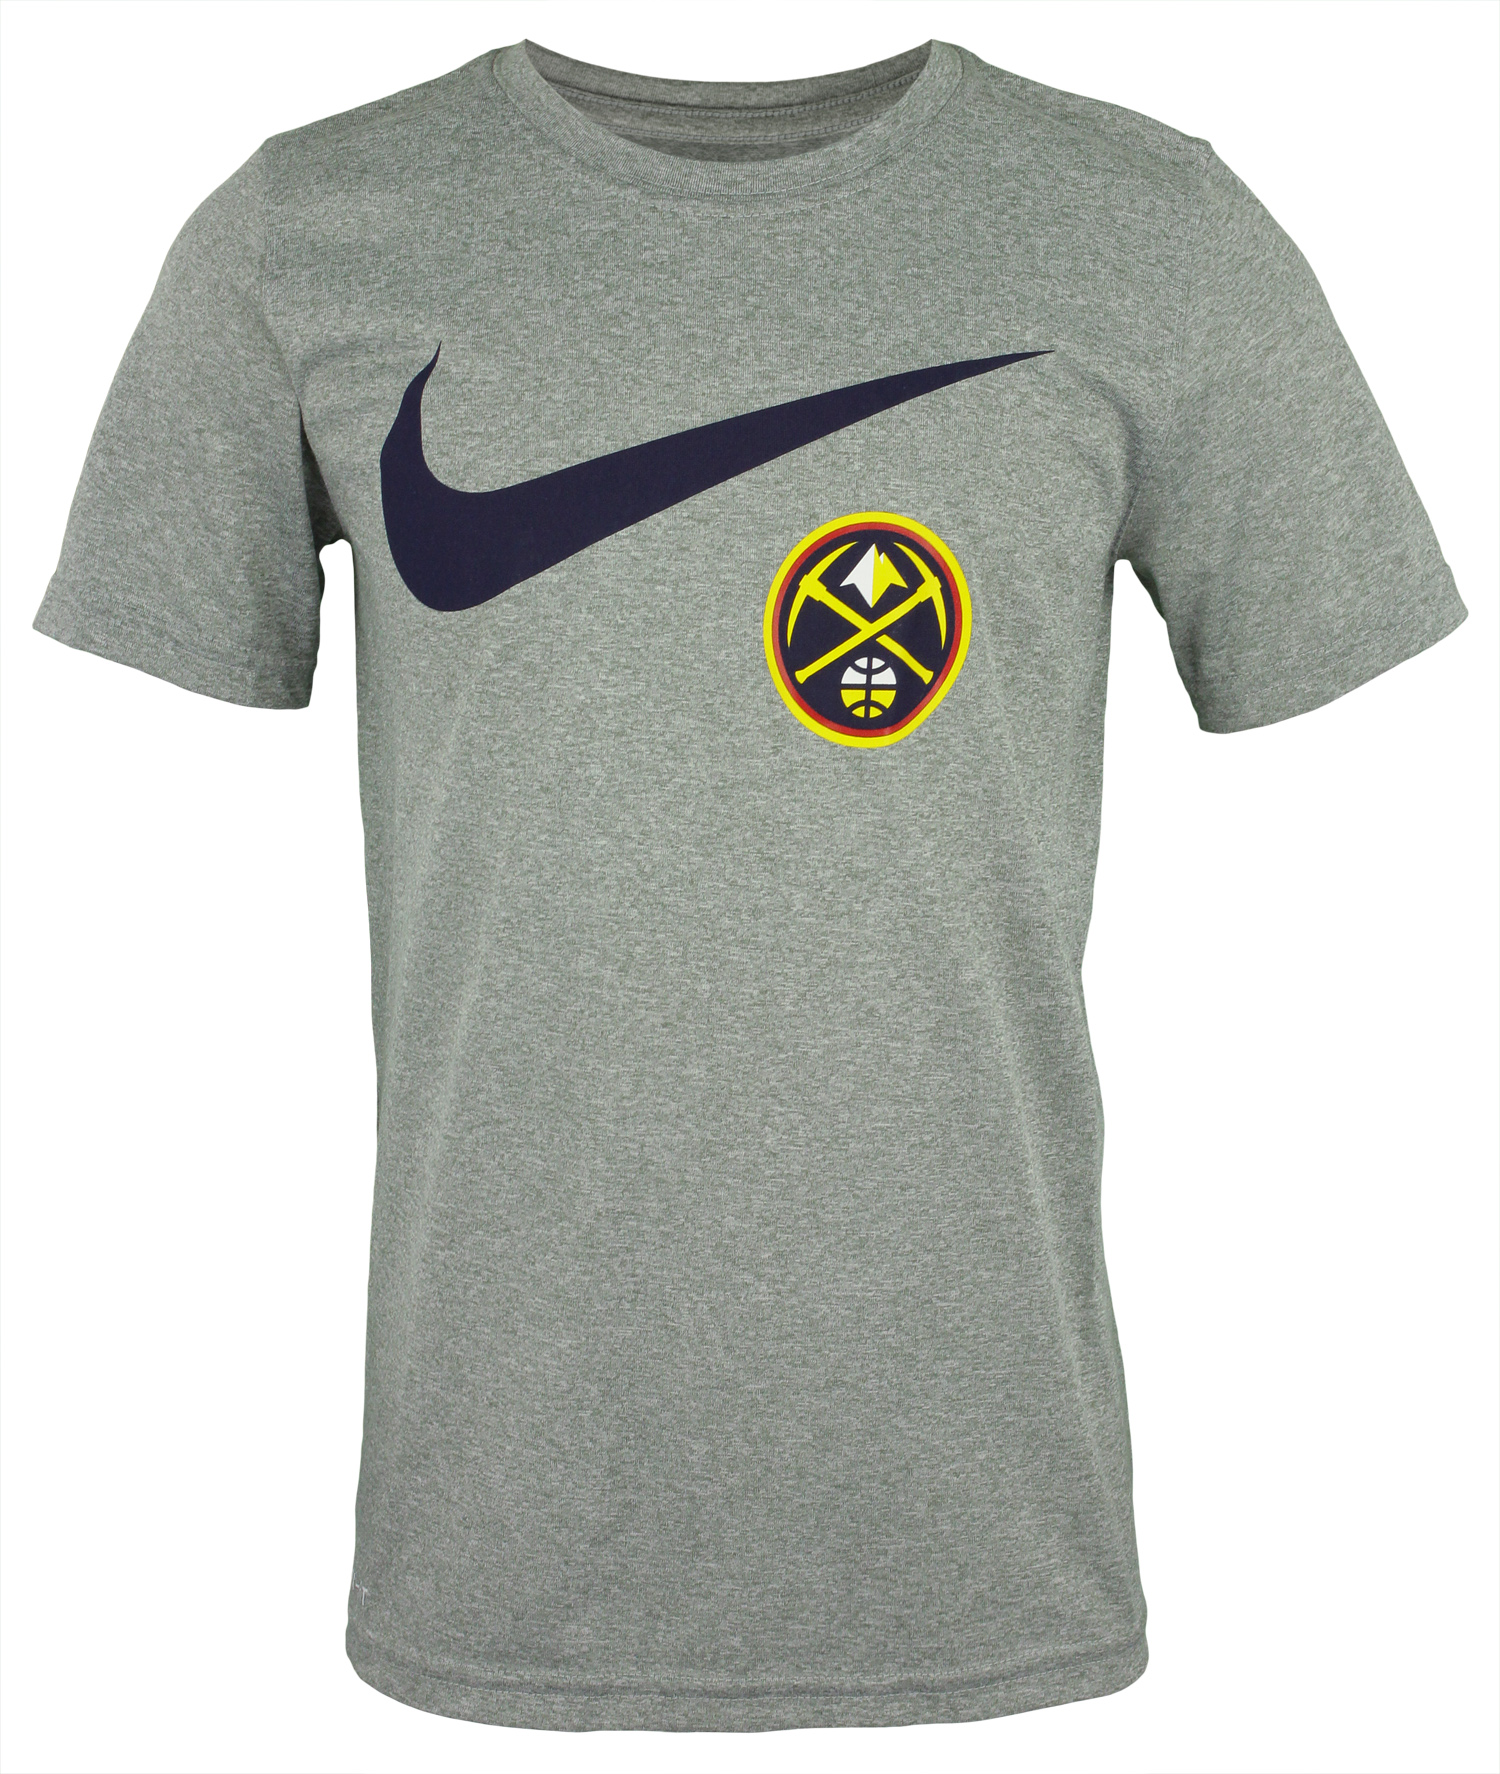 Nike NBA Youth Denver Nuggets Drift Swoosh Logo Tee Shirt | eBay